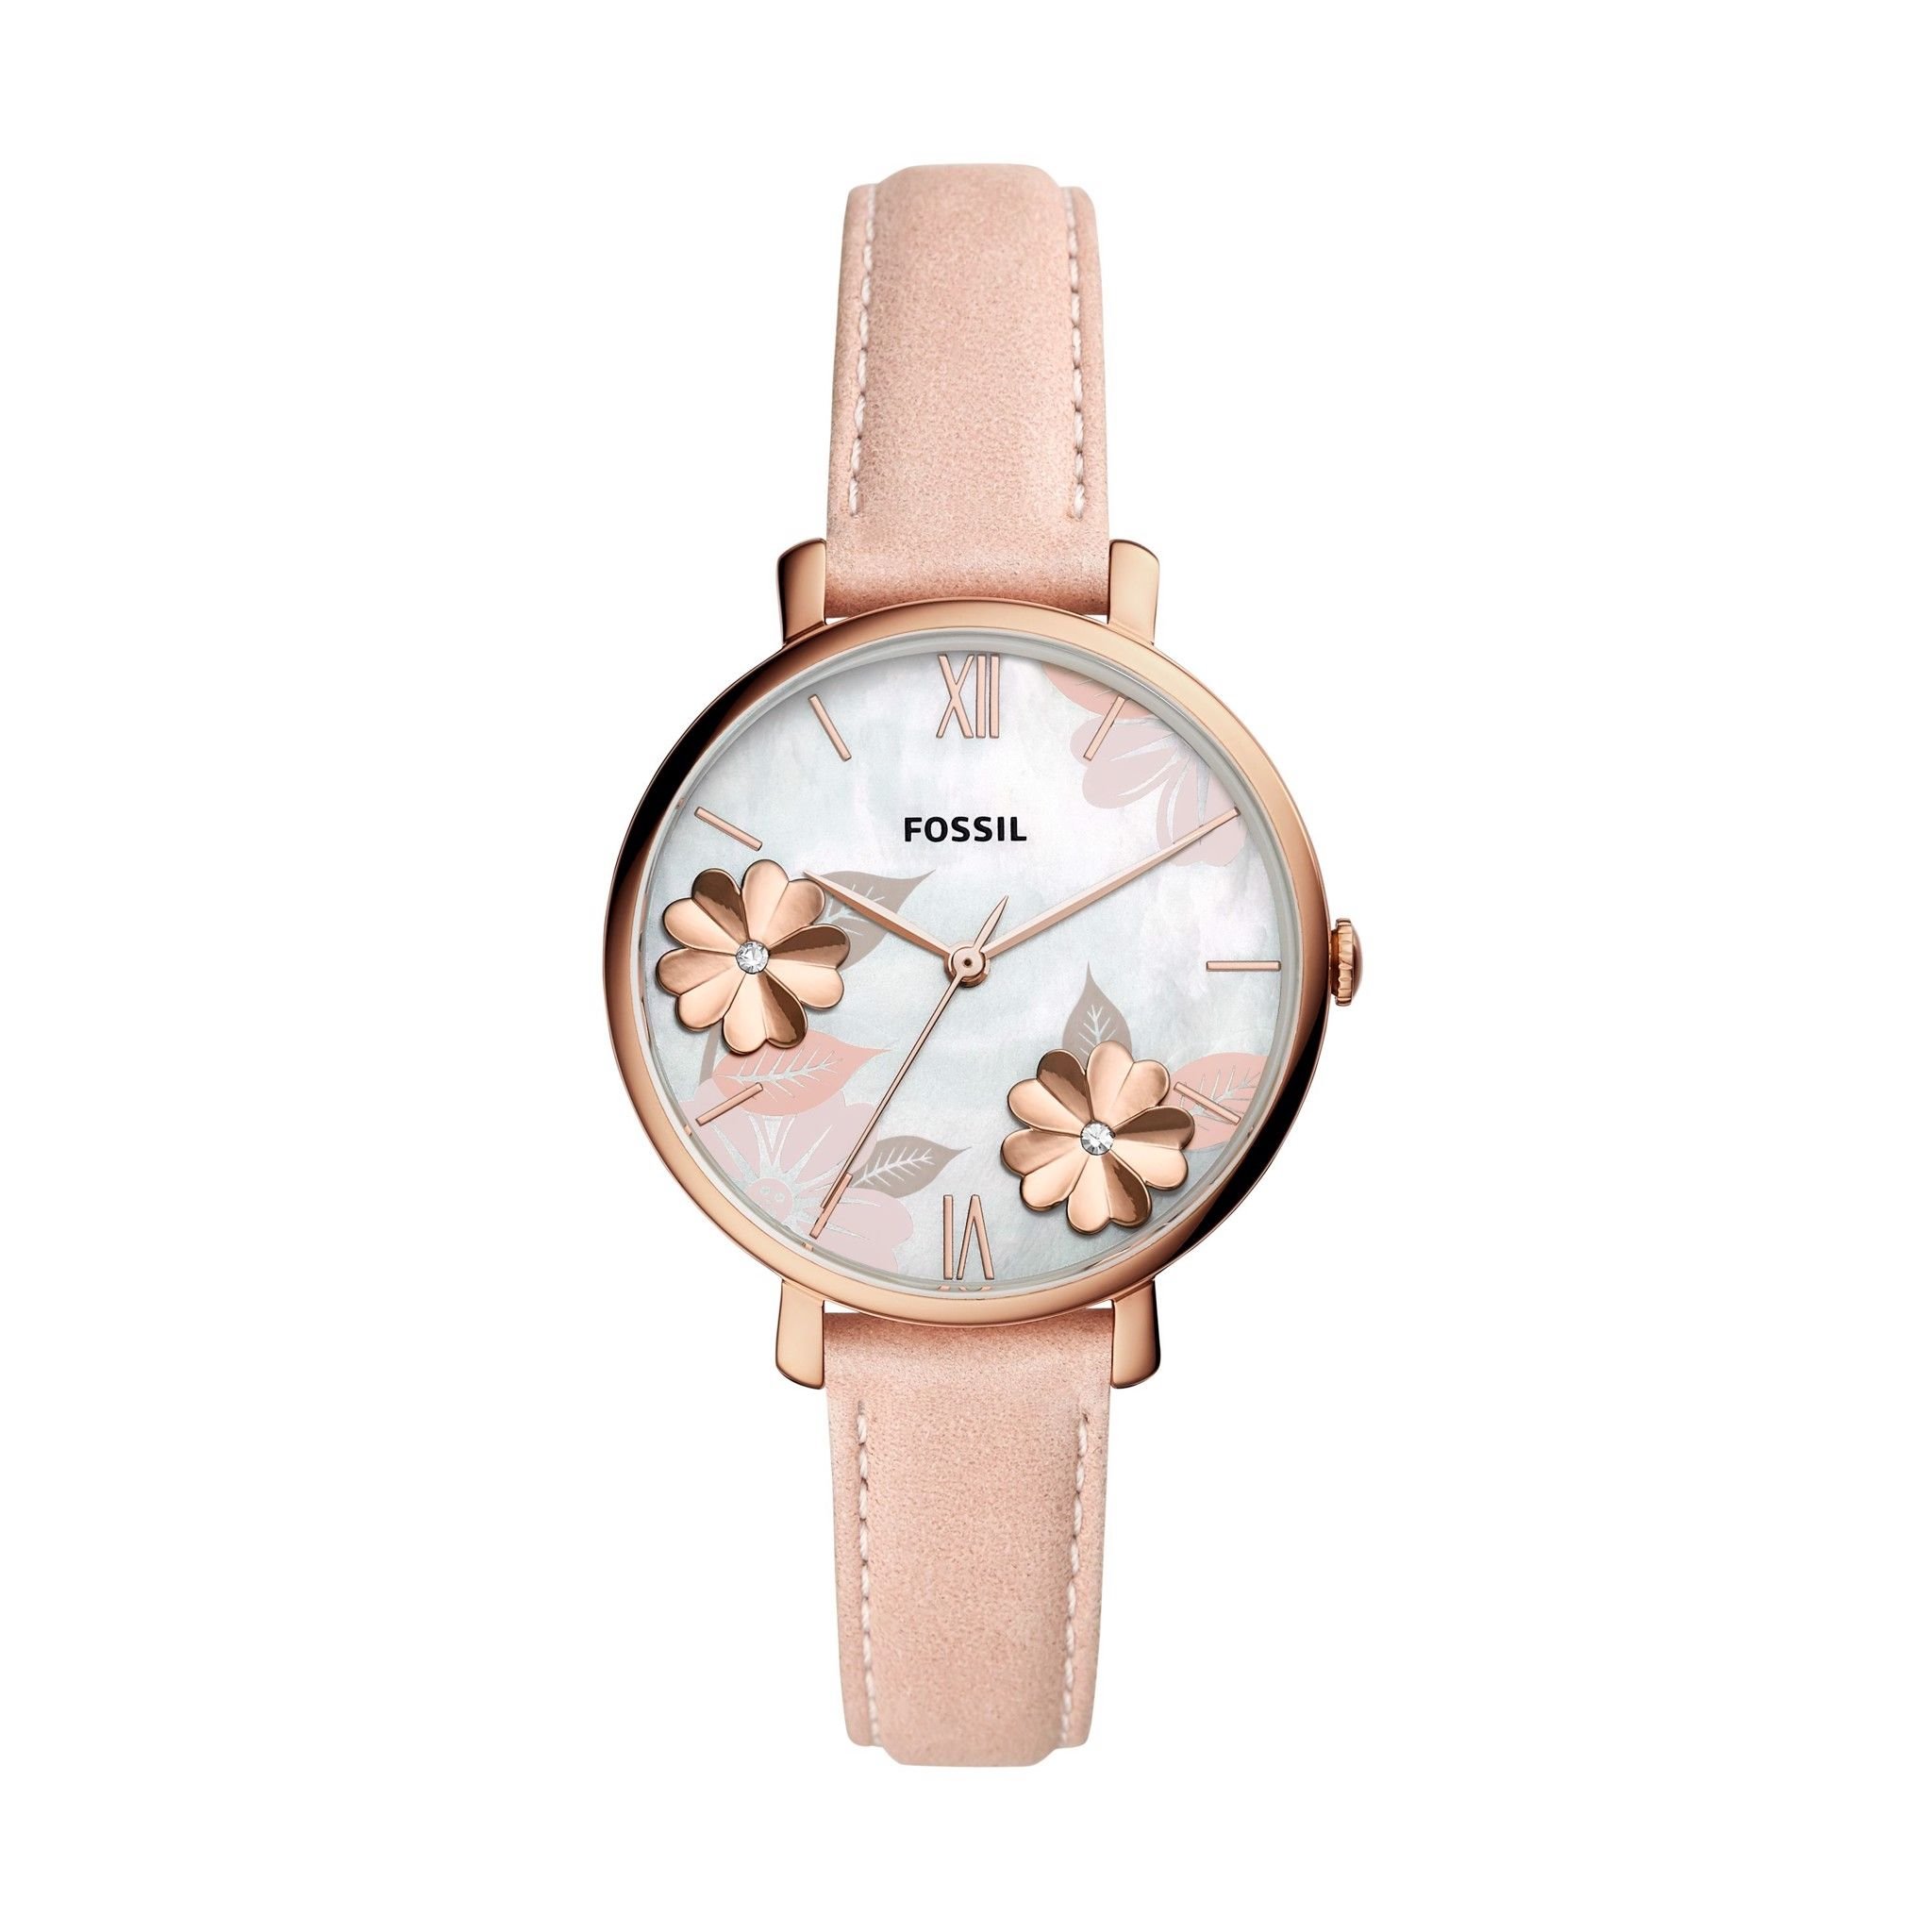  Đồng hồ nữ Fossil JACQUELINE dây da ES4671 - màu hồng 